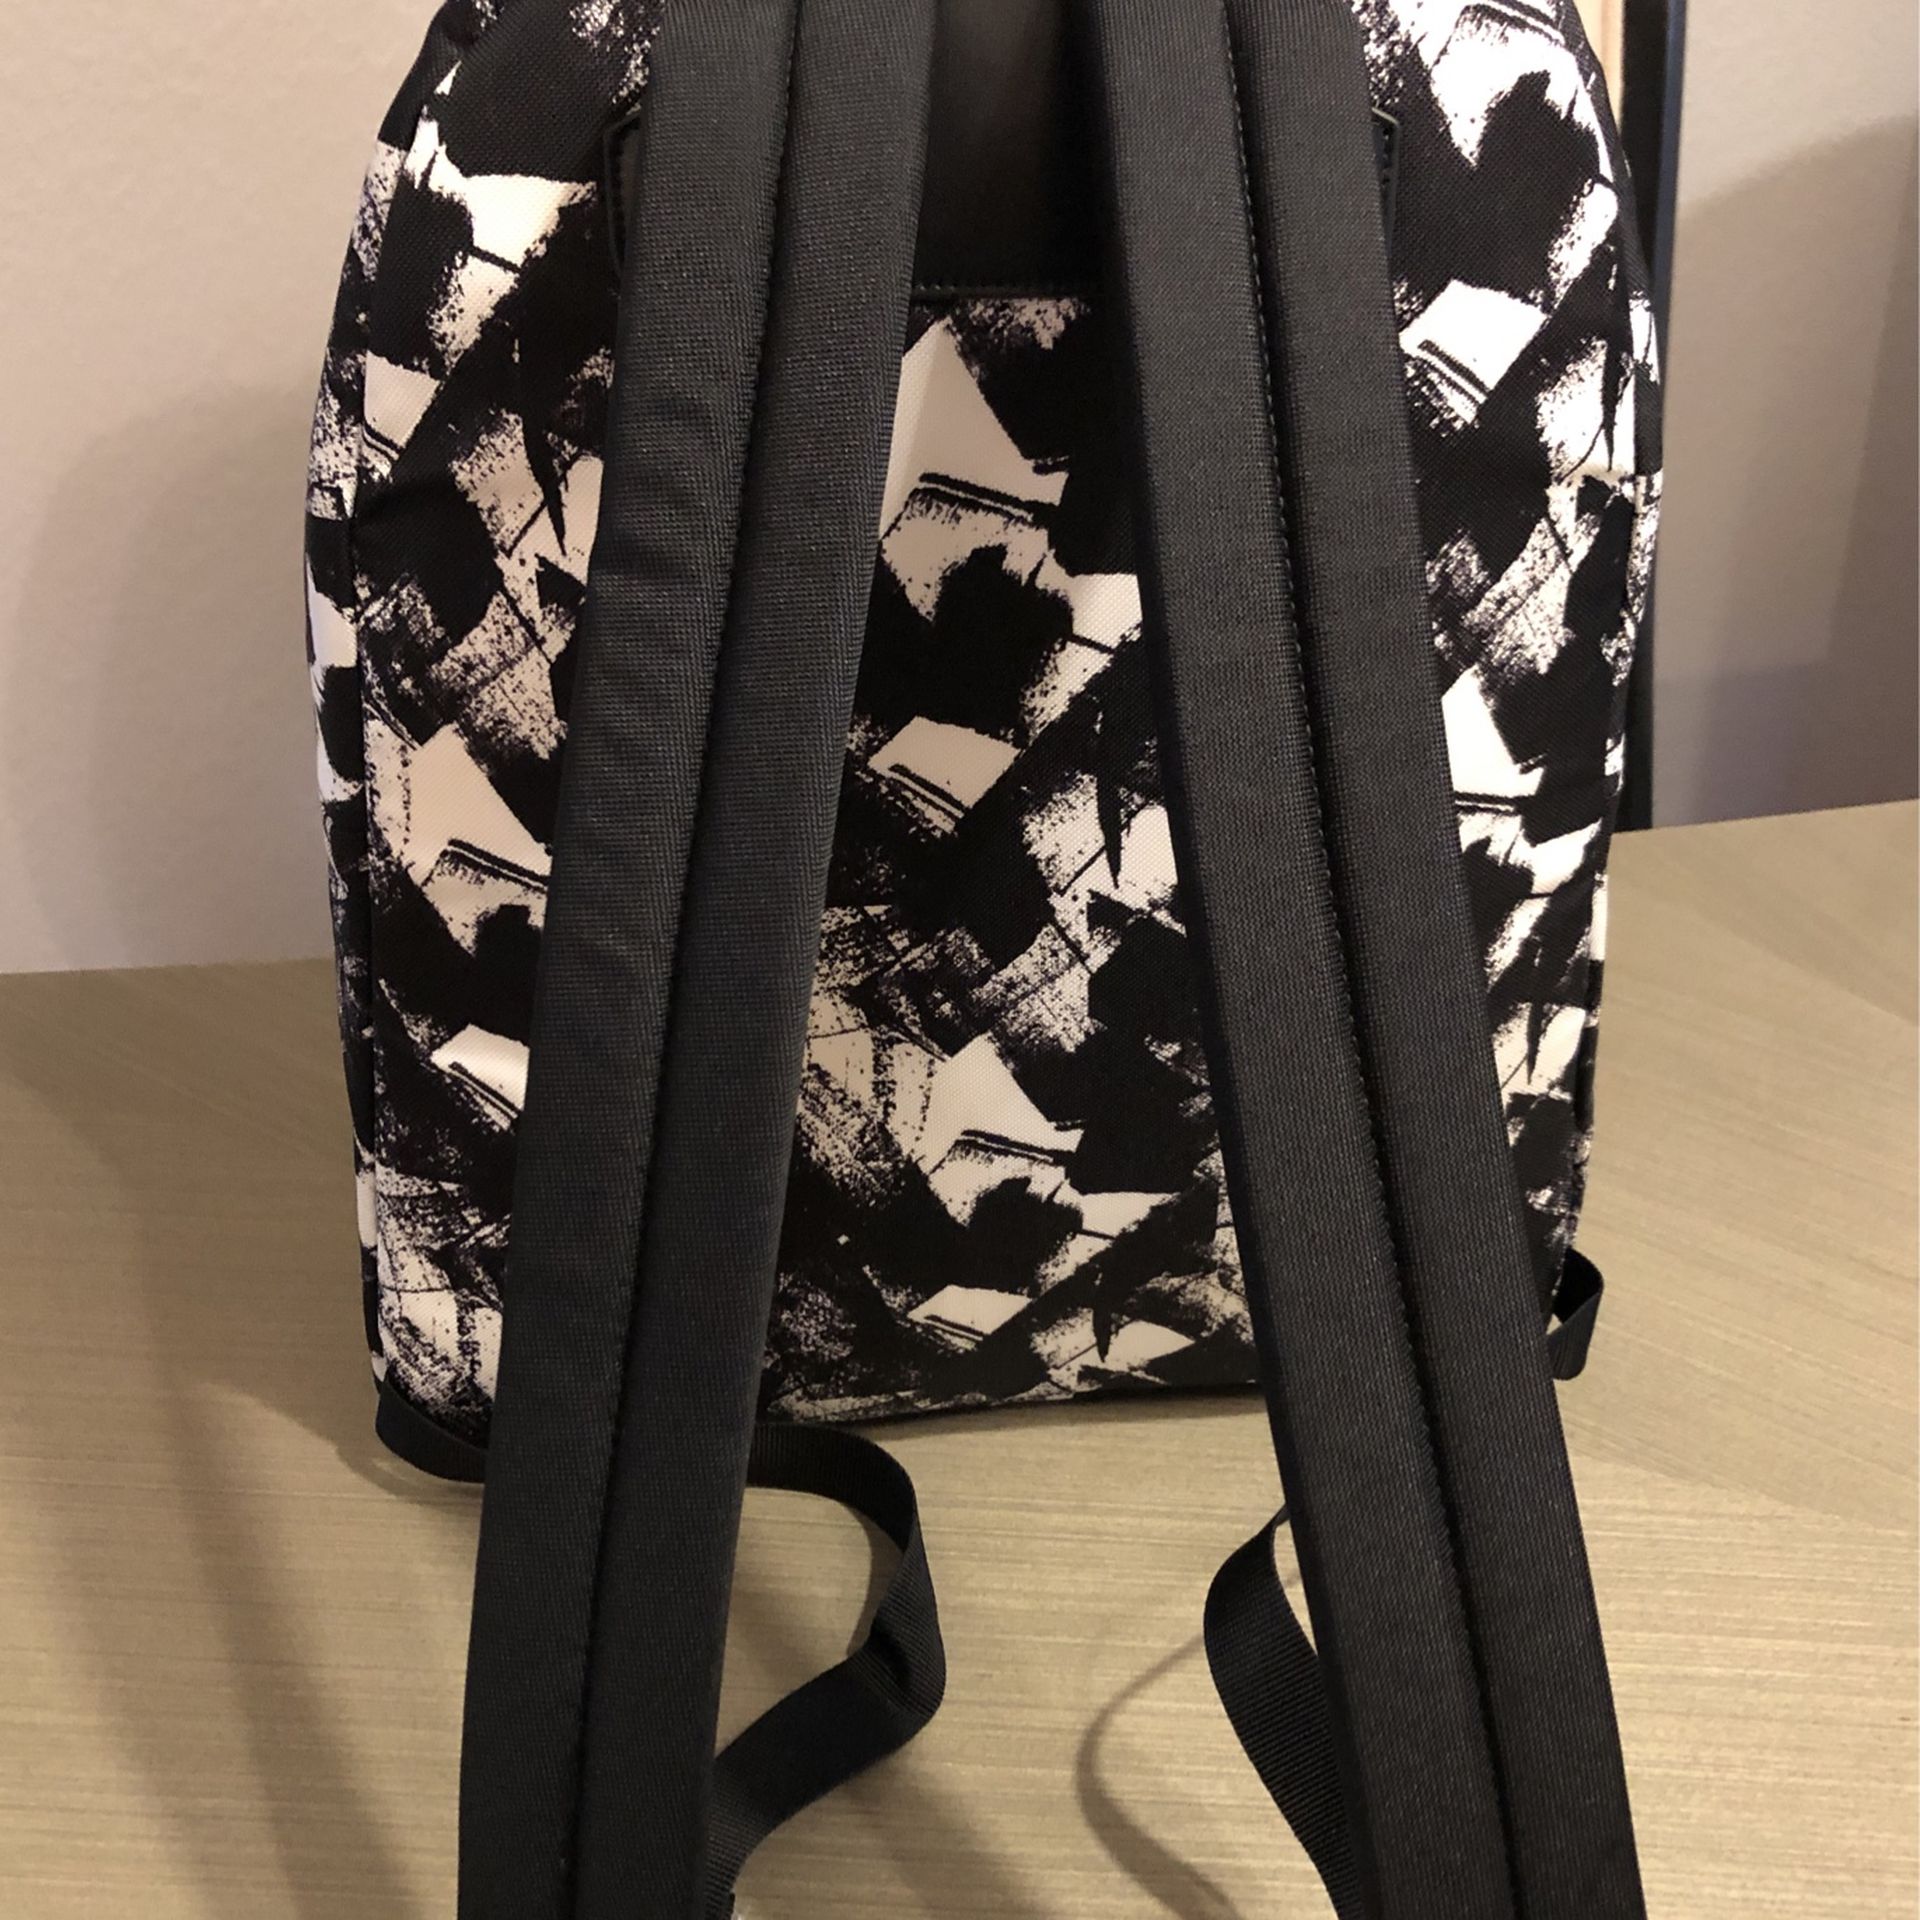 Authentic CELINE Bag in Shiny Black TRIOMPHE Logo Calfskin for Sale in Las  Vegas, NV - OfferUp